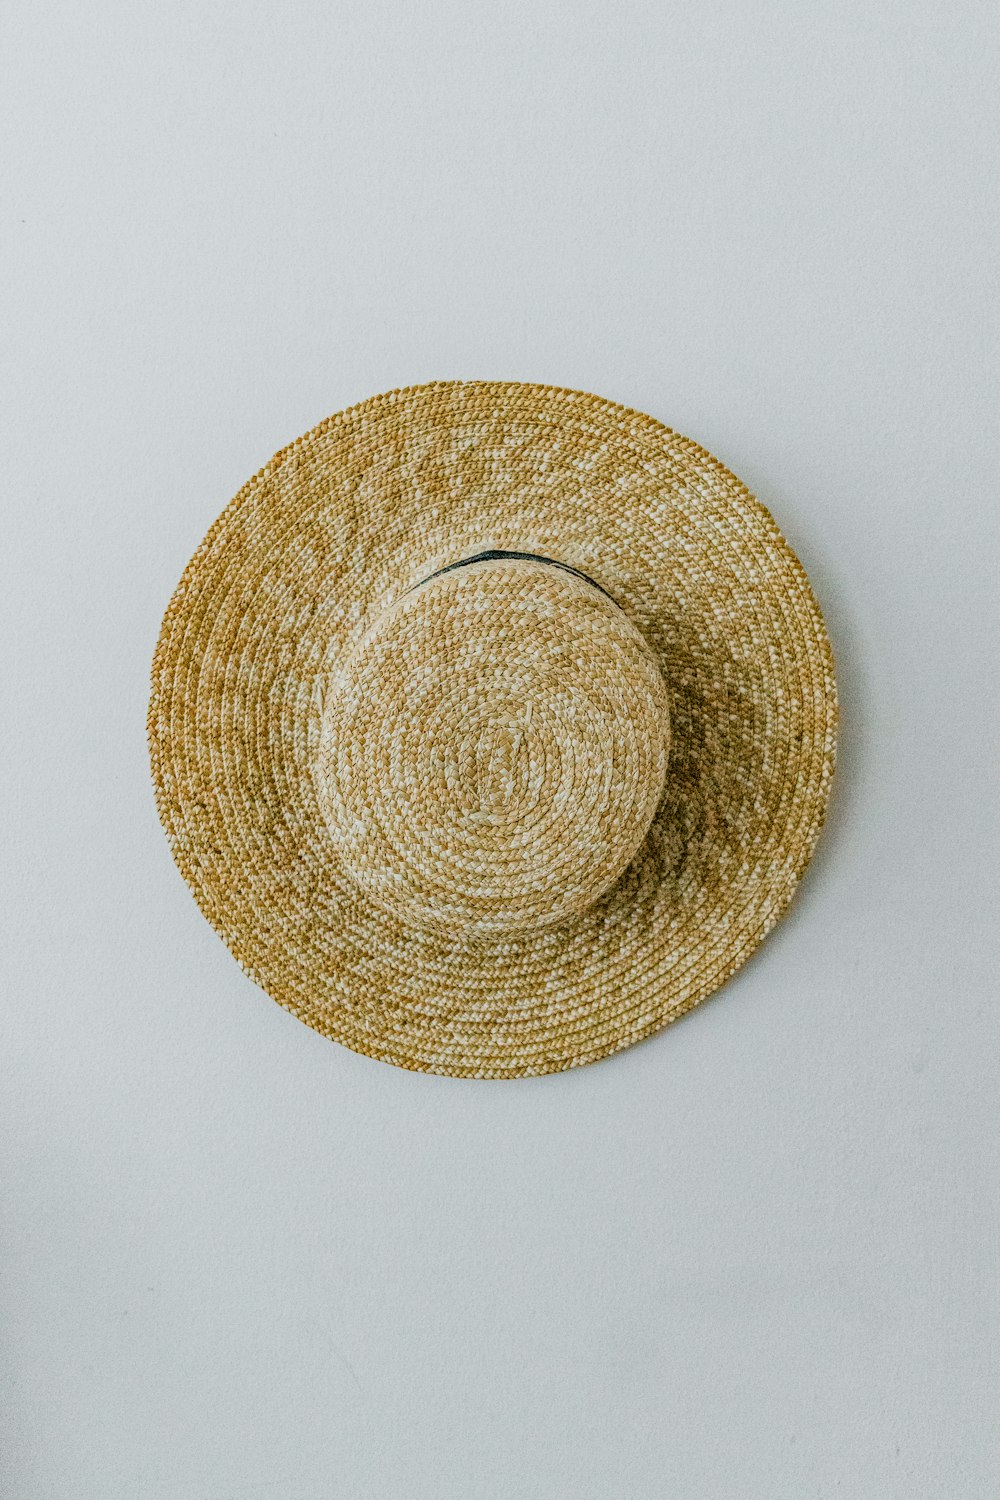 brown round hat on white surface